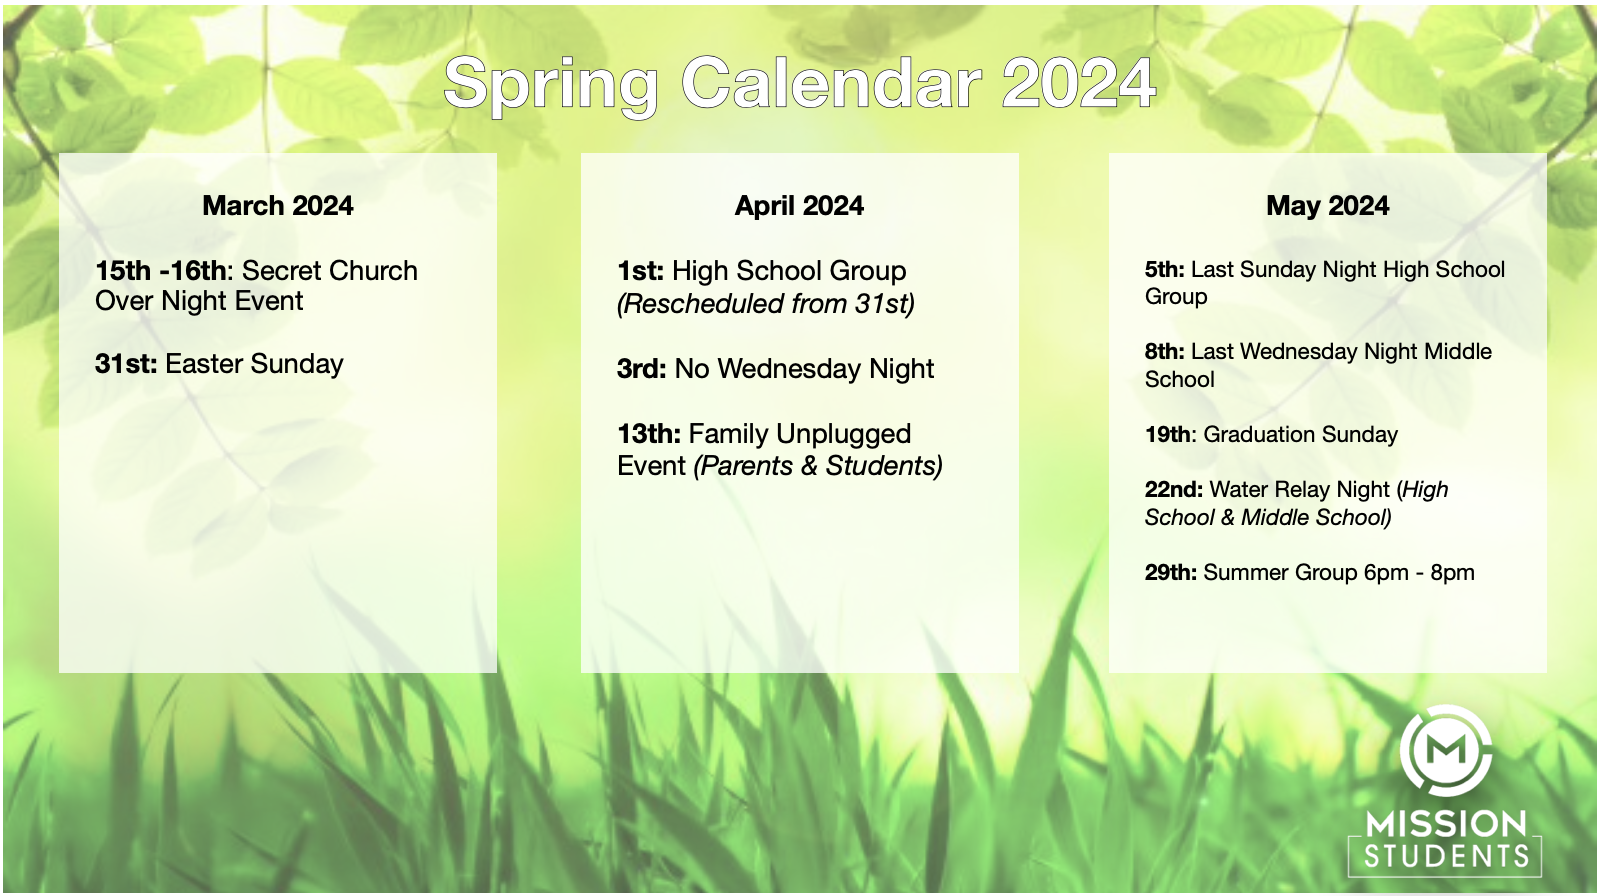 Student's Spring Calendar